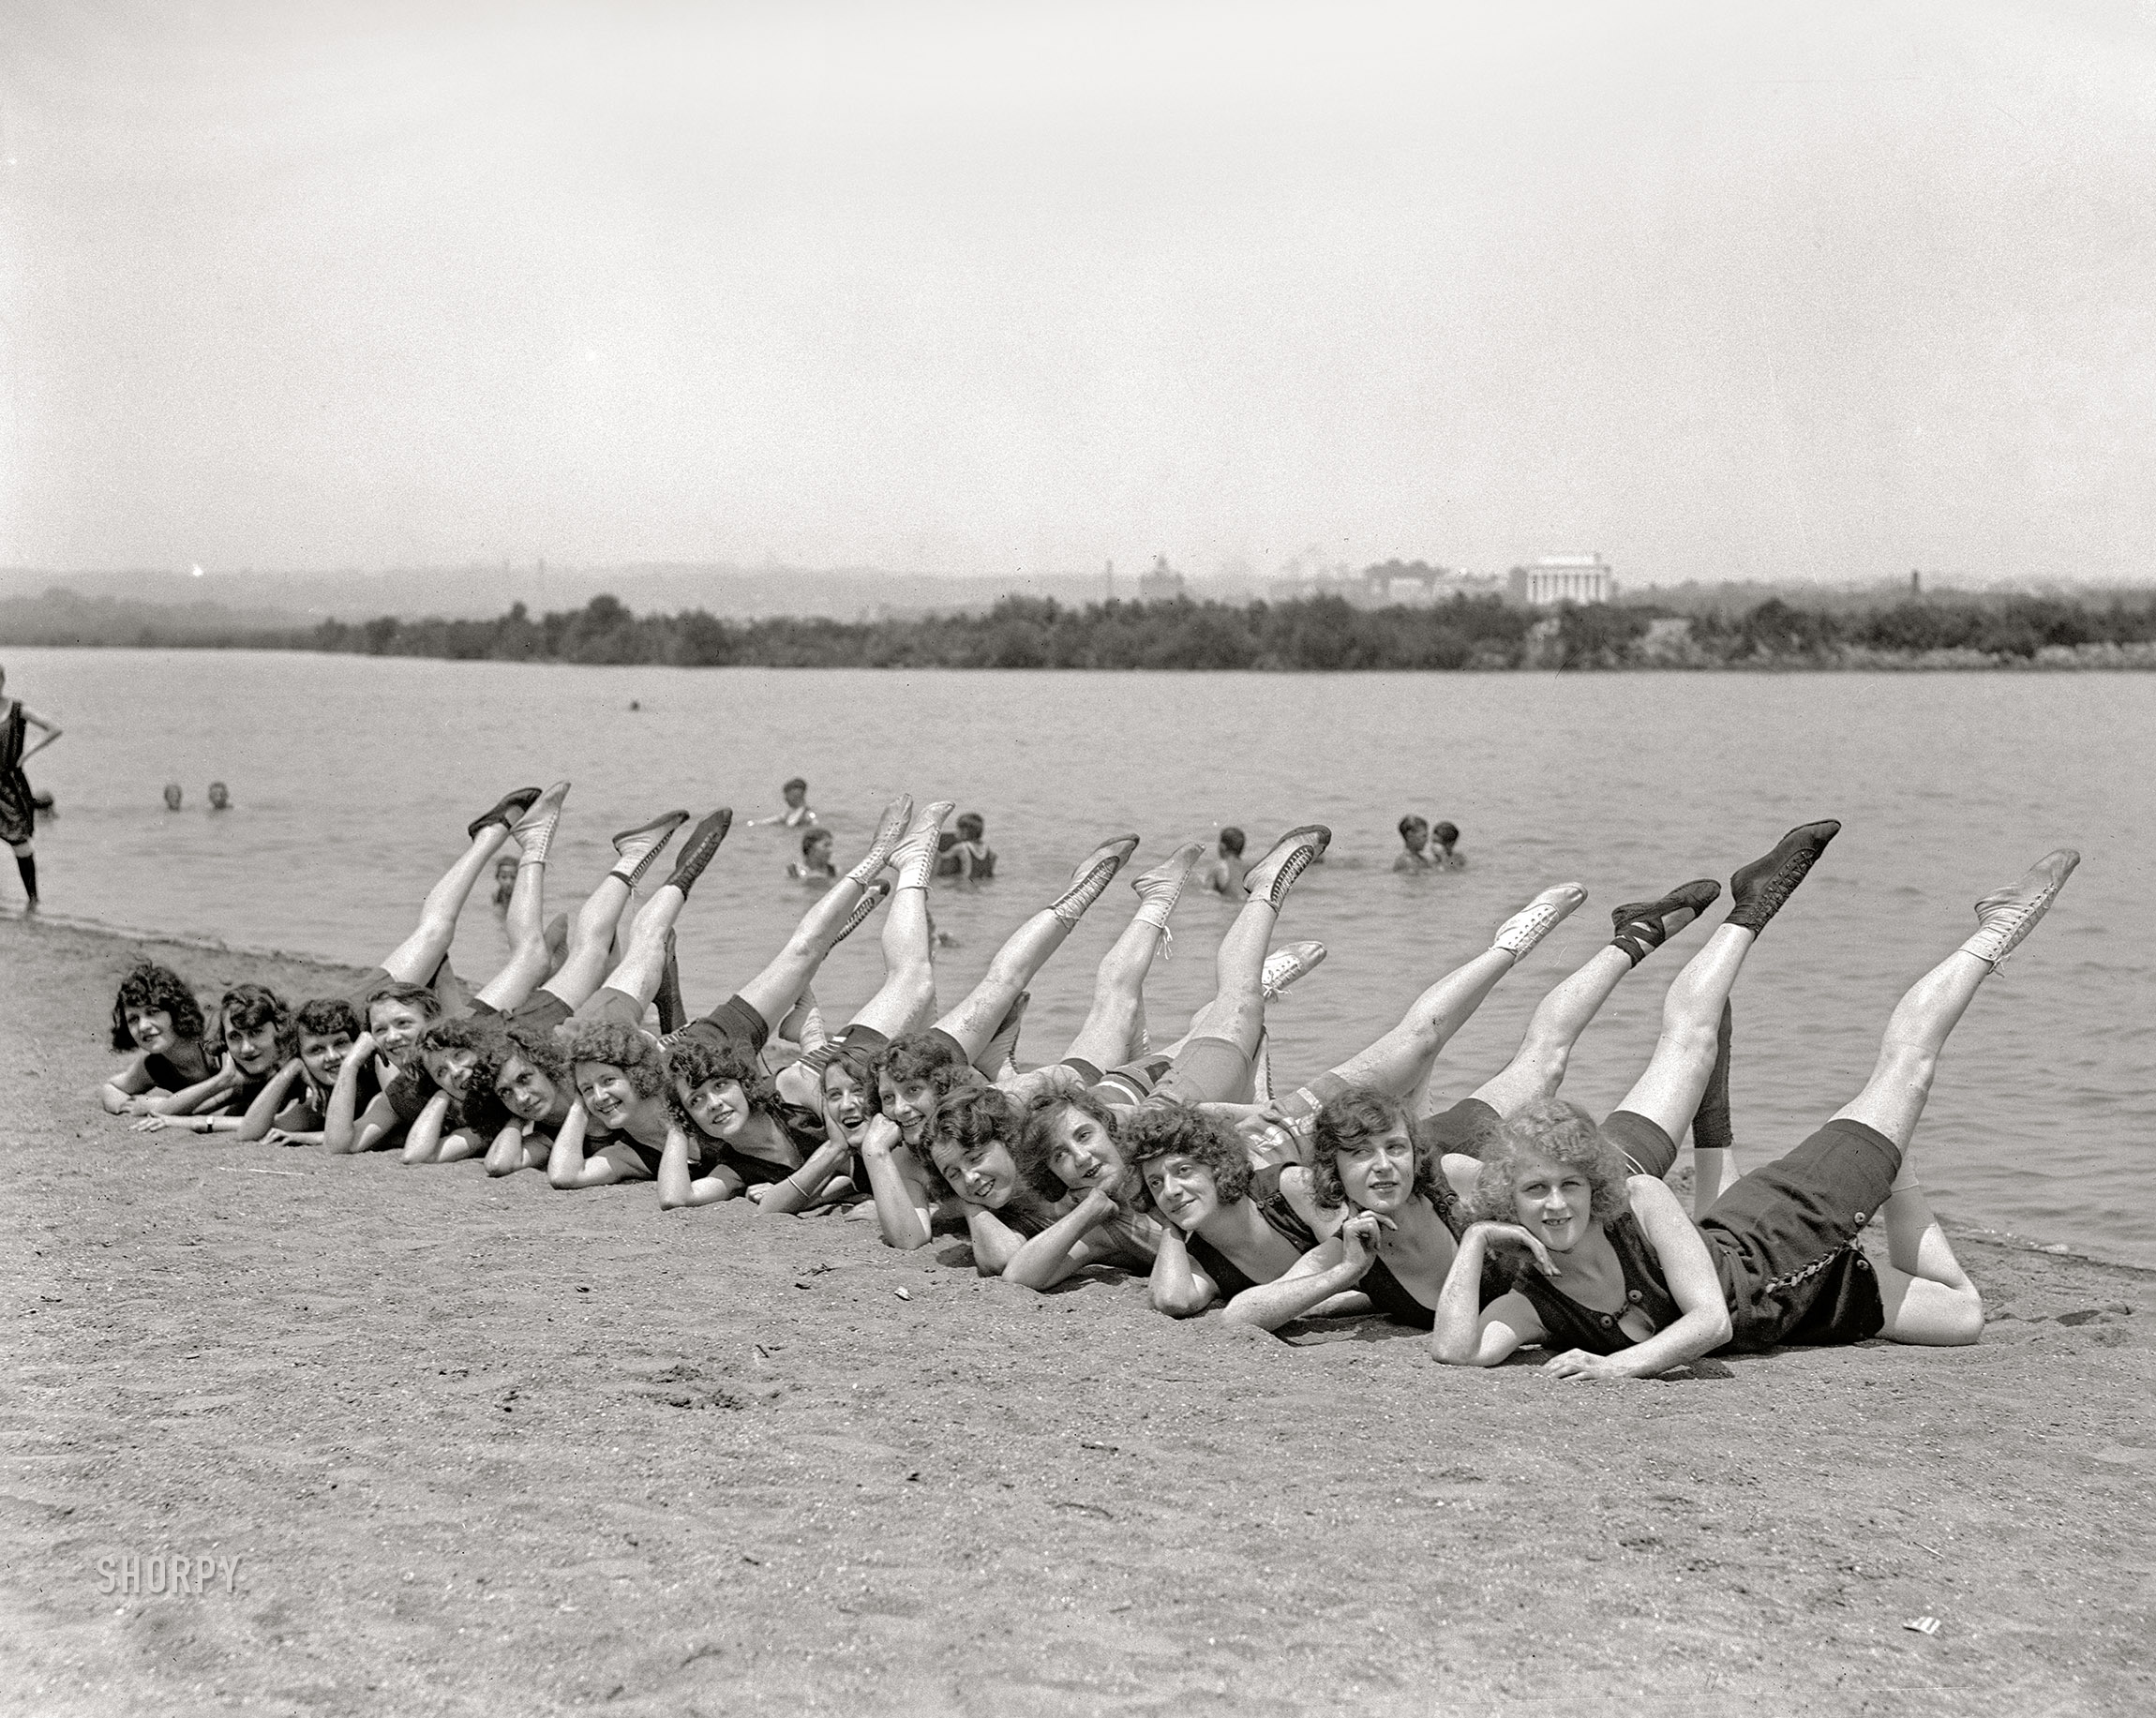 July 19, 1923. Washington, D.C. "Sunshine Girls at beach." The London dance troupe originated by the British musical-theater impresario John Tiller. View full size.